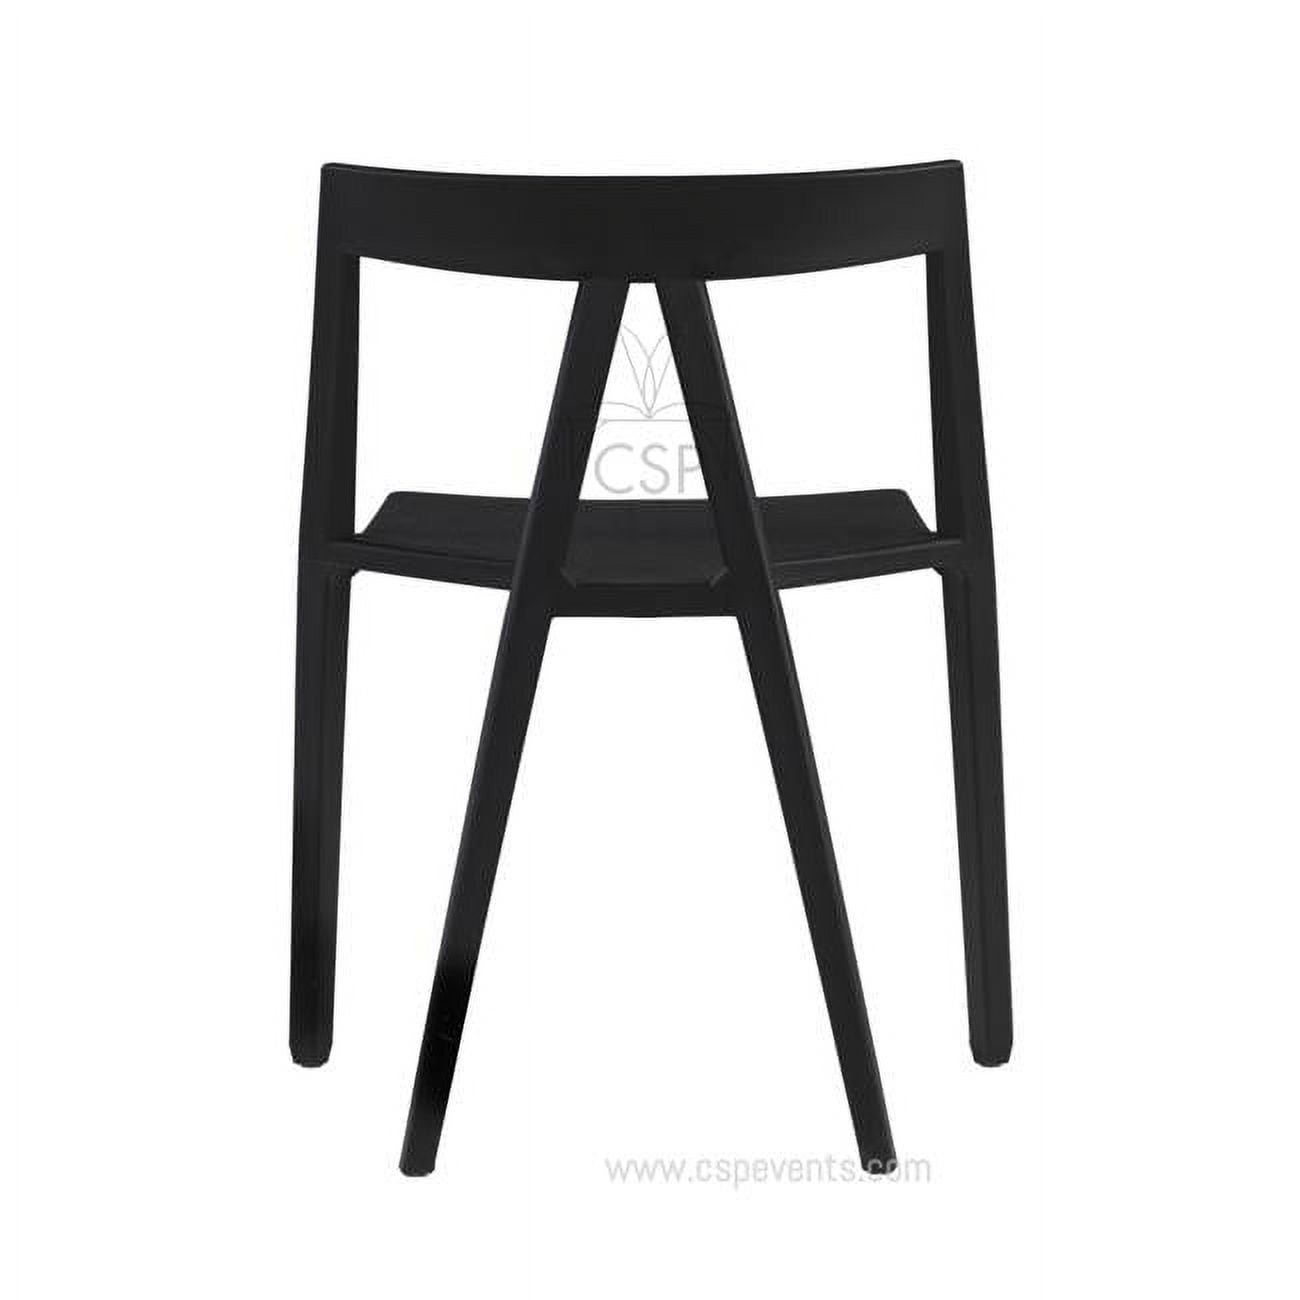 Rpp-milan-blk-4 Milan Resin Polypropylene Stackable Event Chair, Black - 29.5 In. - Set Of 4